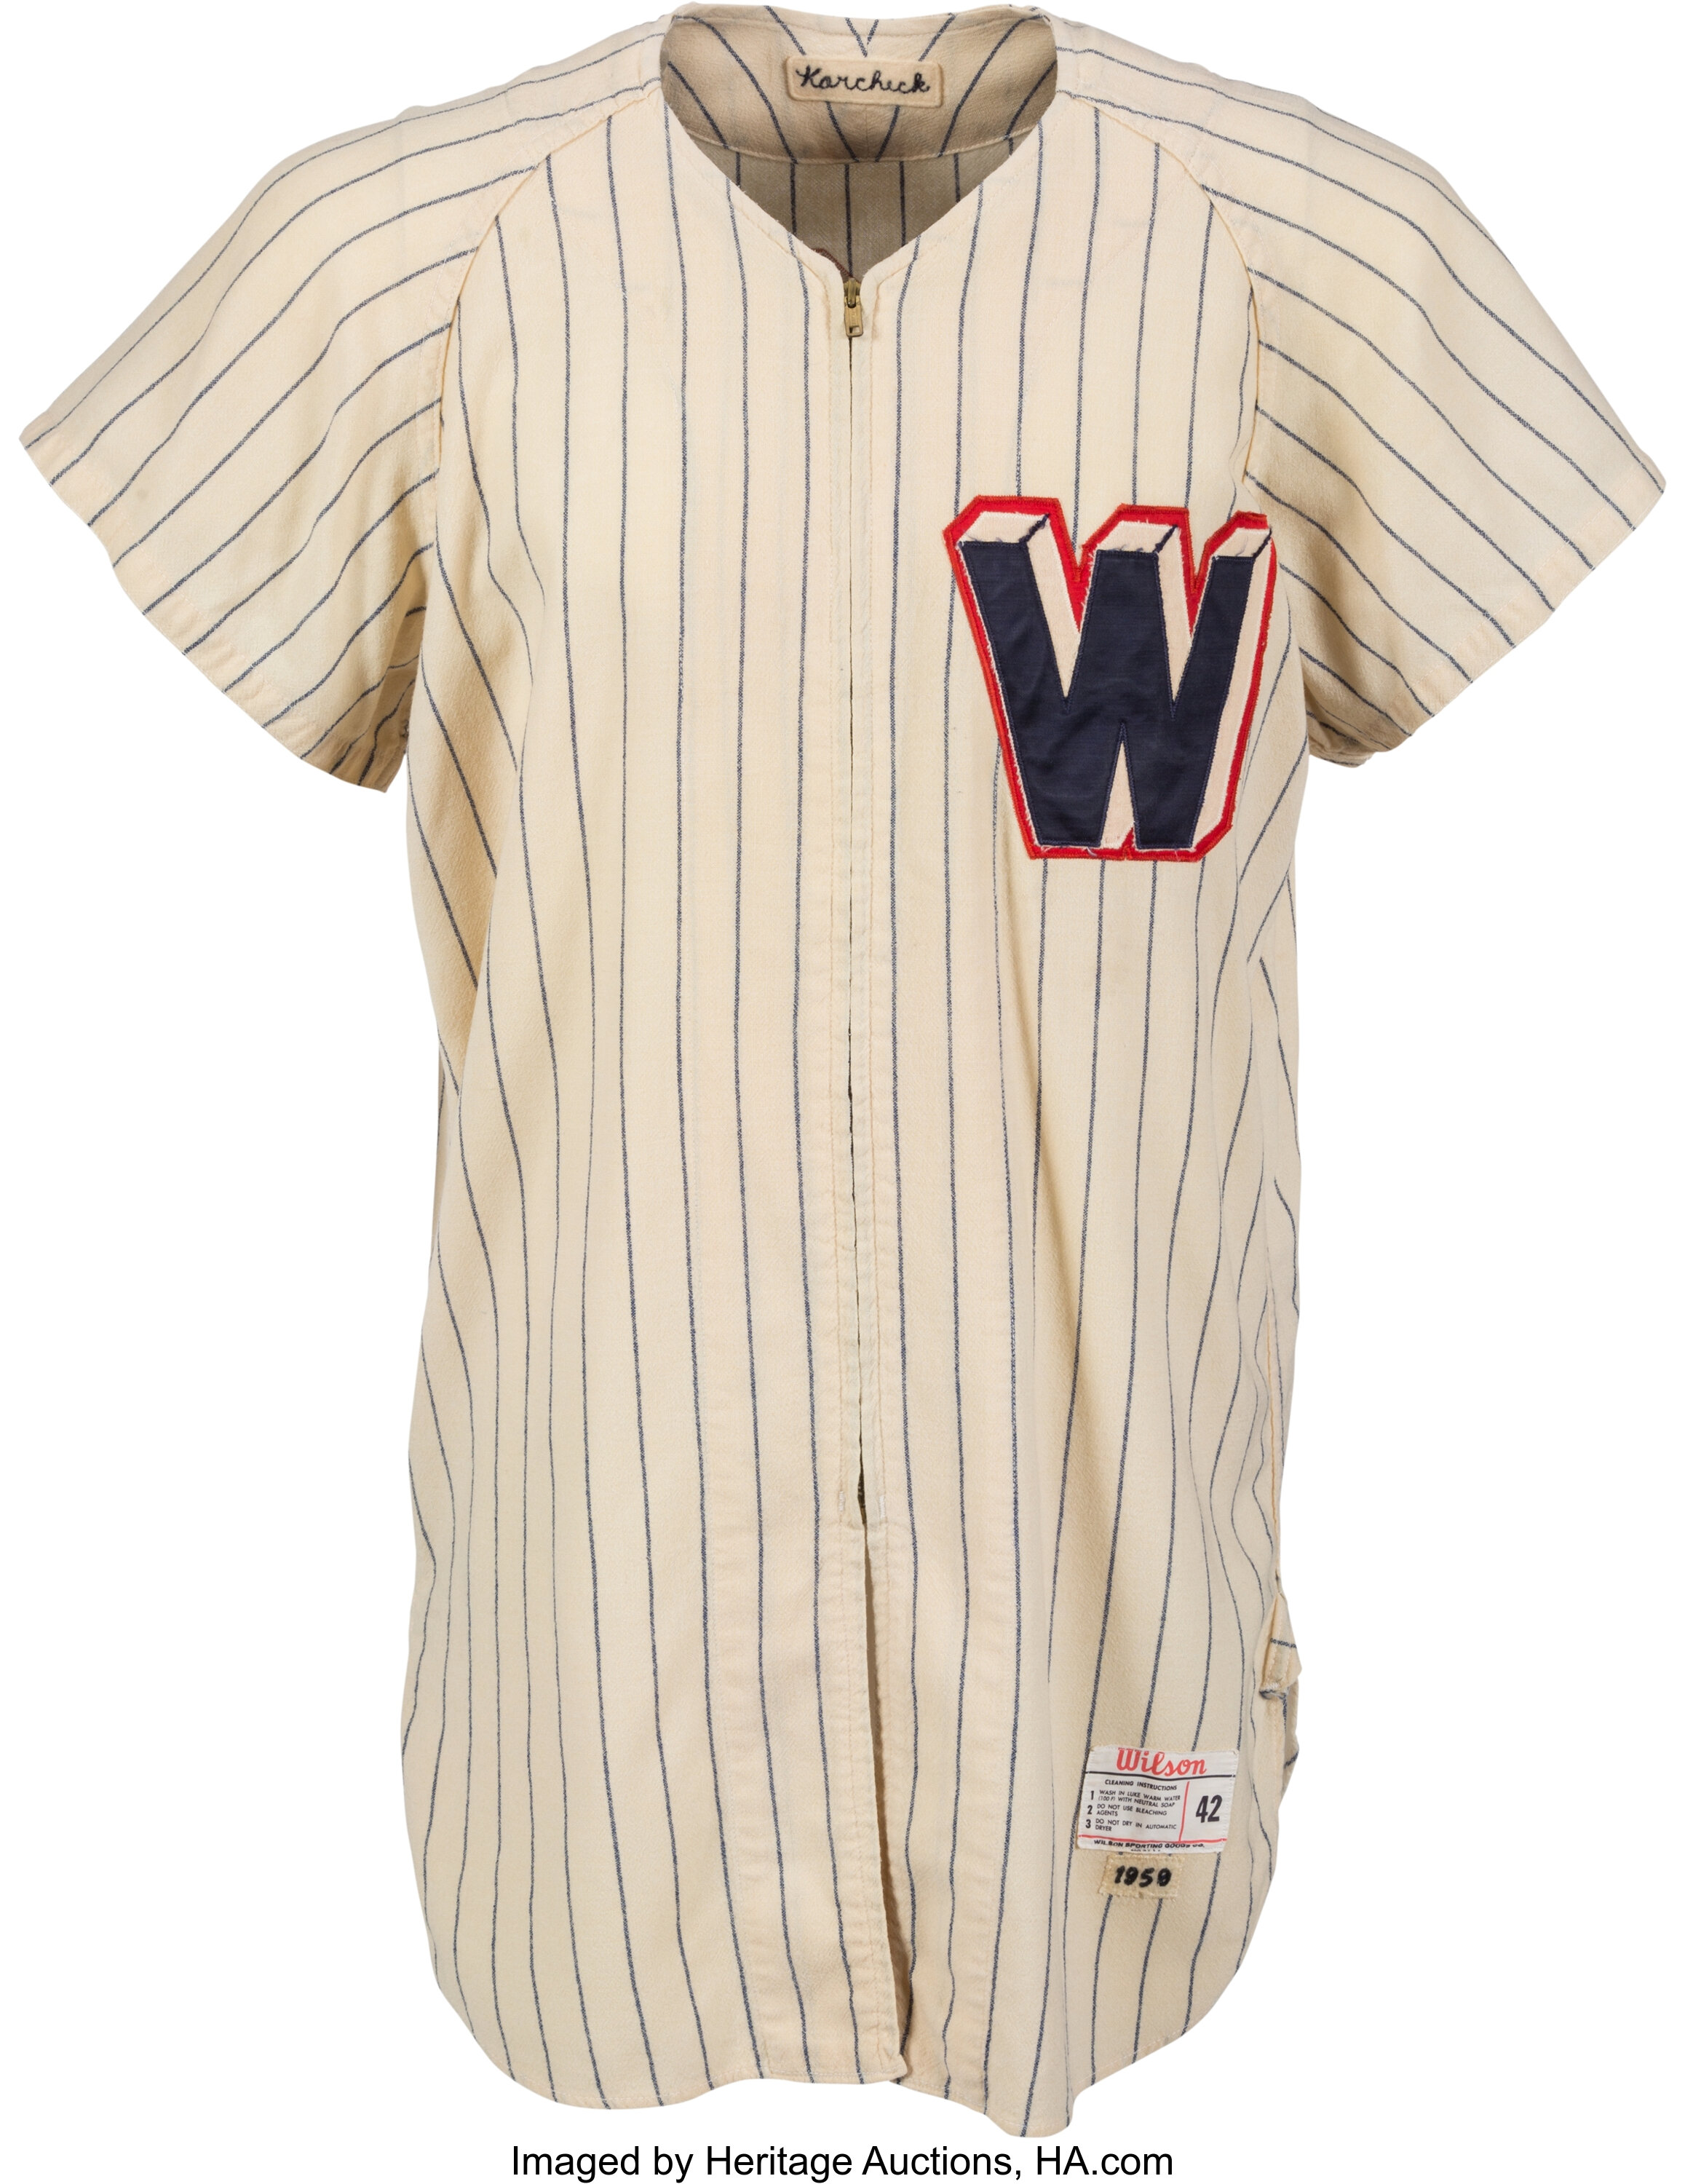 washington senators baseball jersey